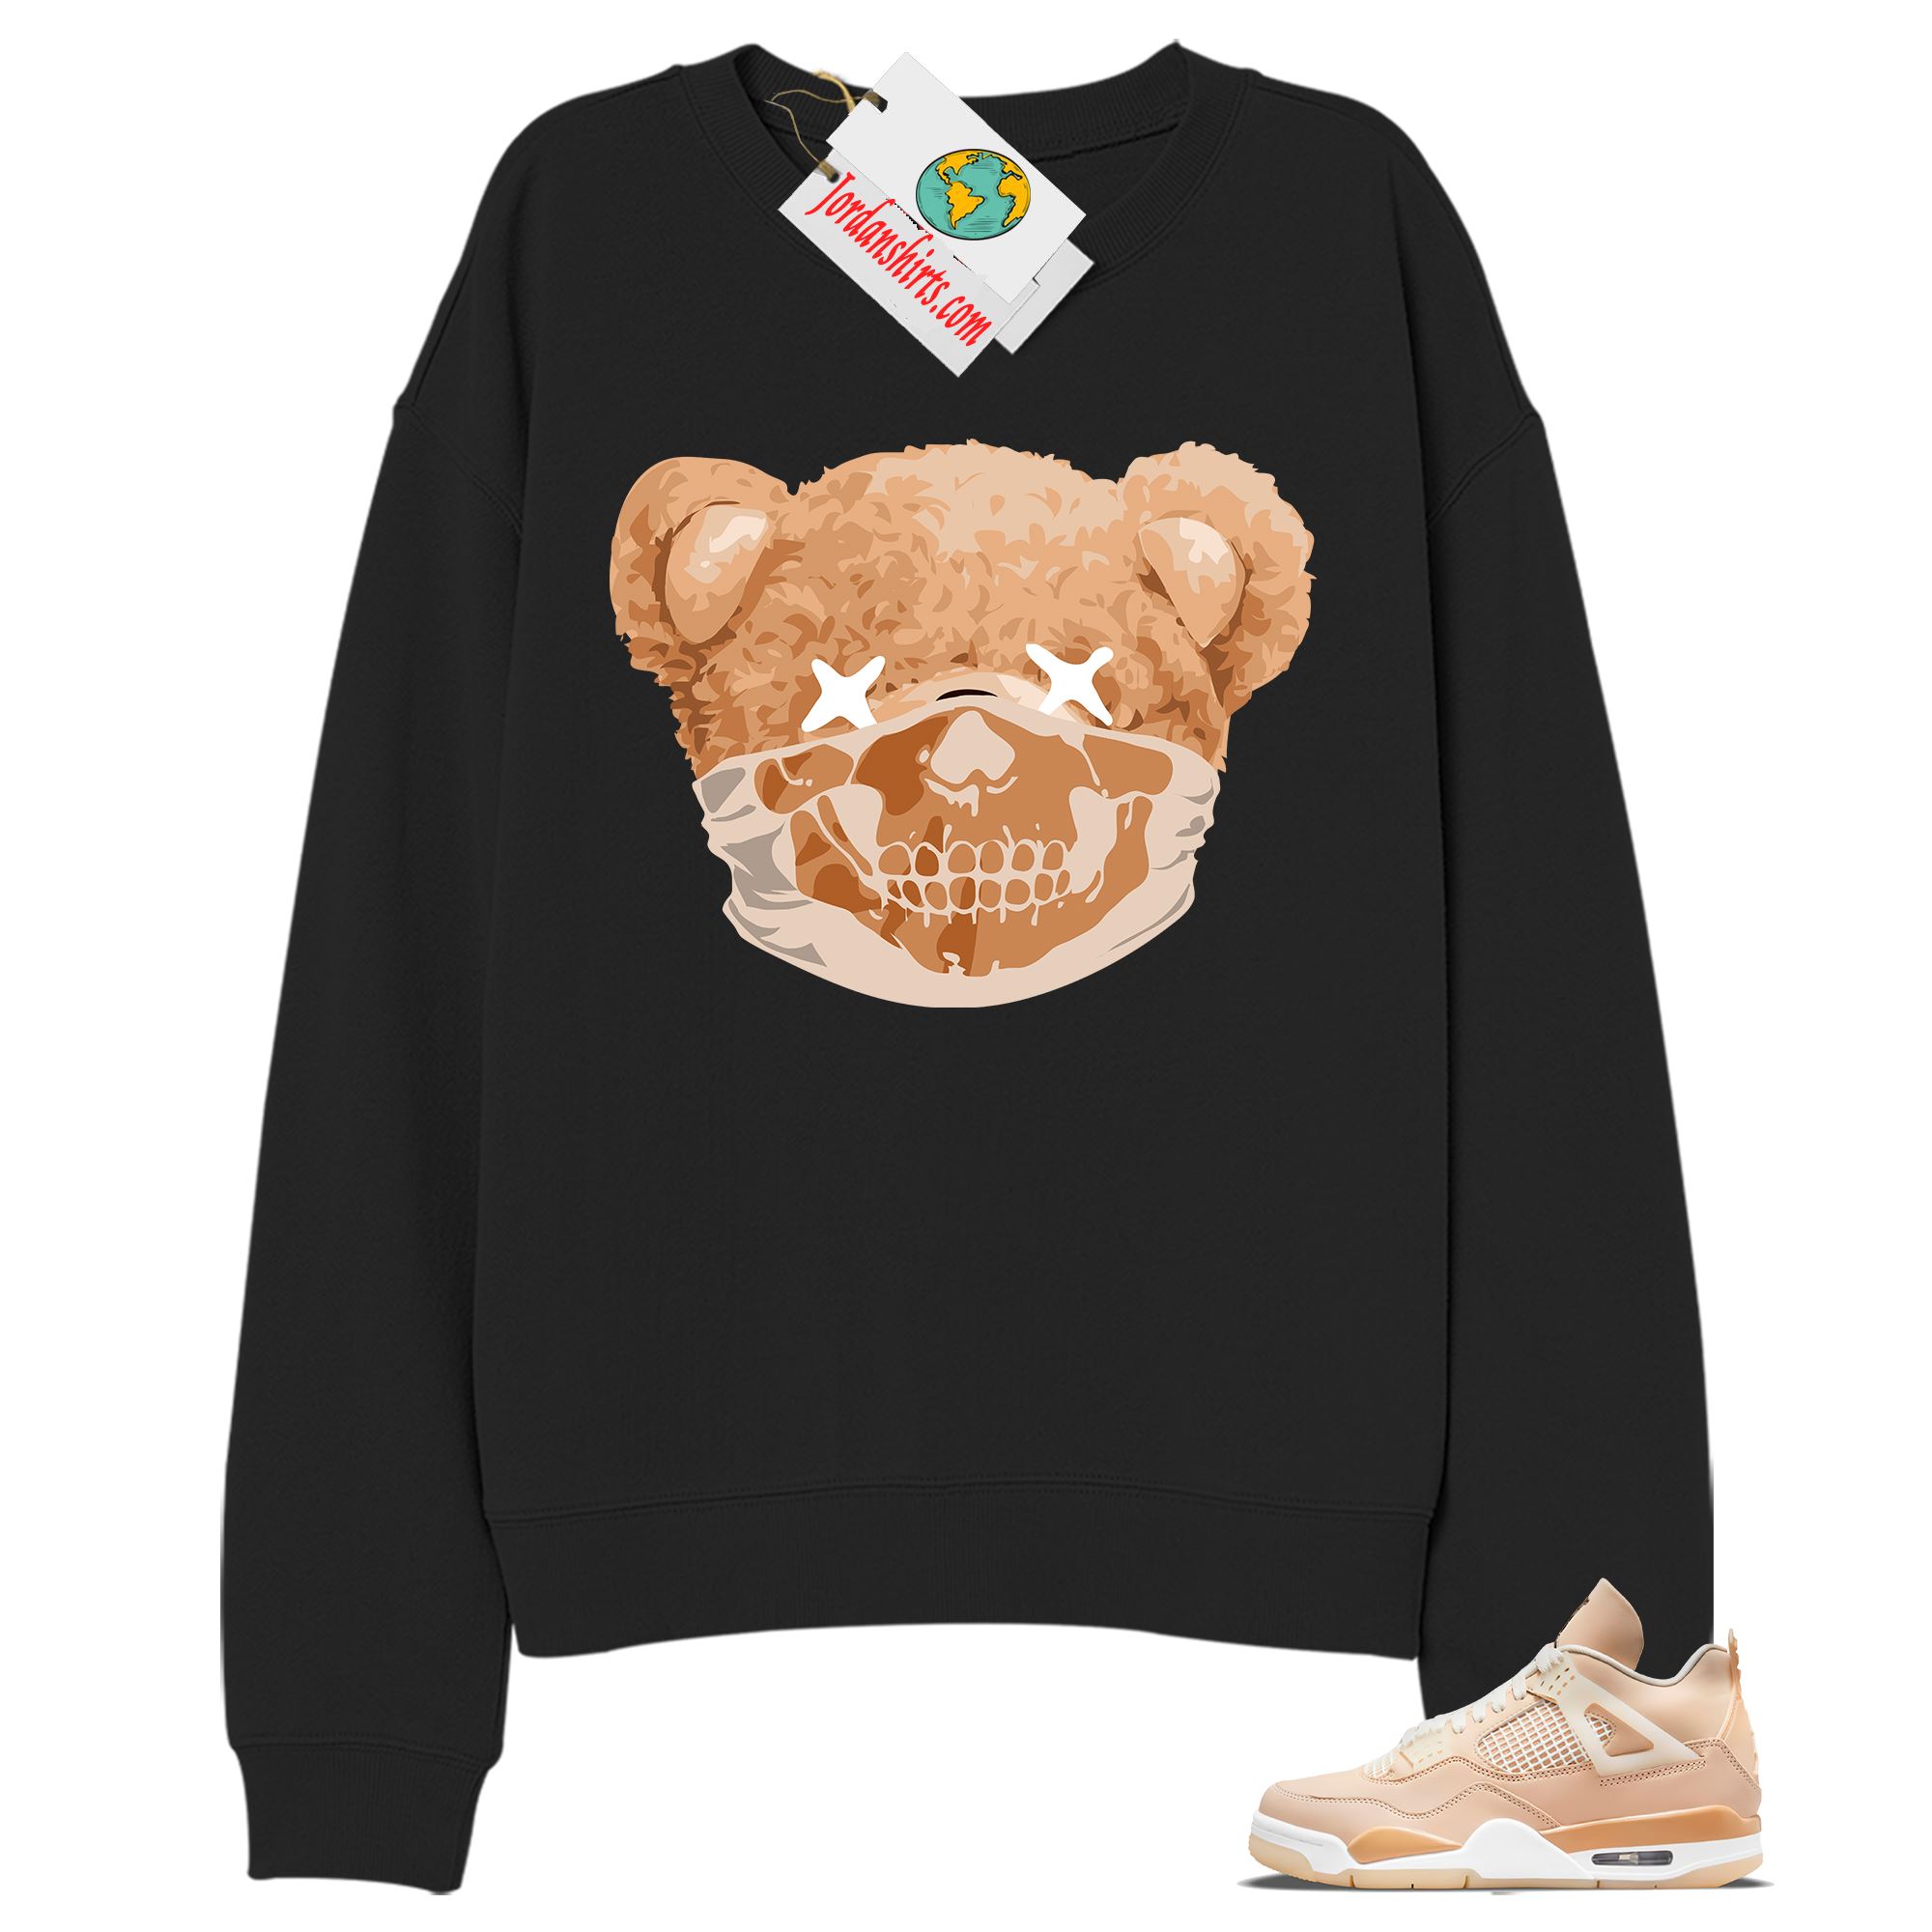 Jordan 4 Sweatshirt, Teddy Bear Skull Bandana Black Sweatshirt Air Jordan 4 Shimmer 4s Full Size Up To 5xl